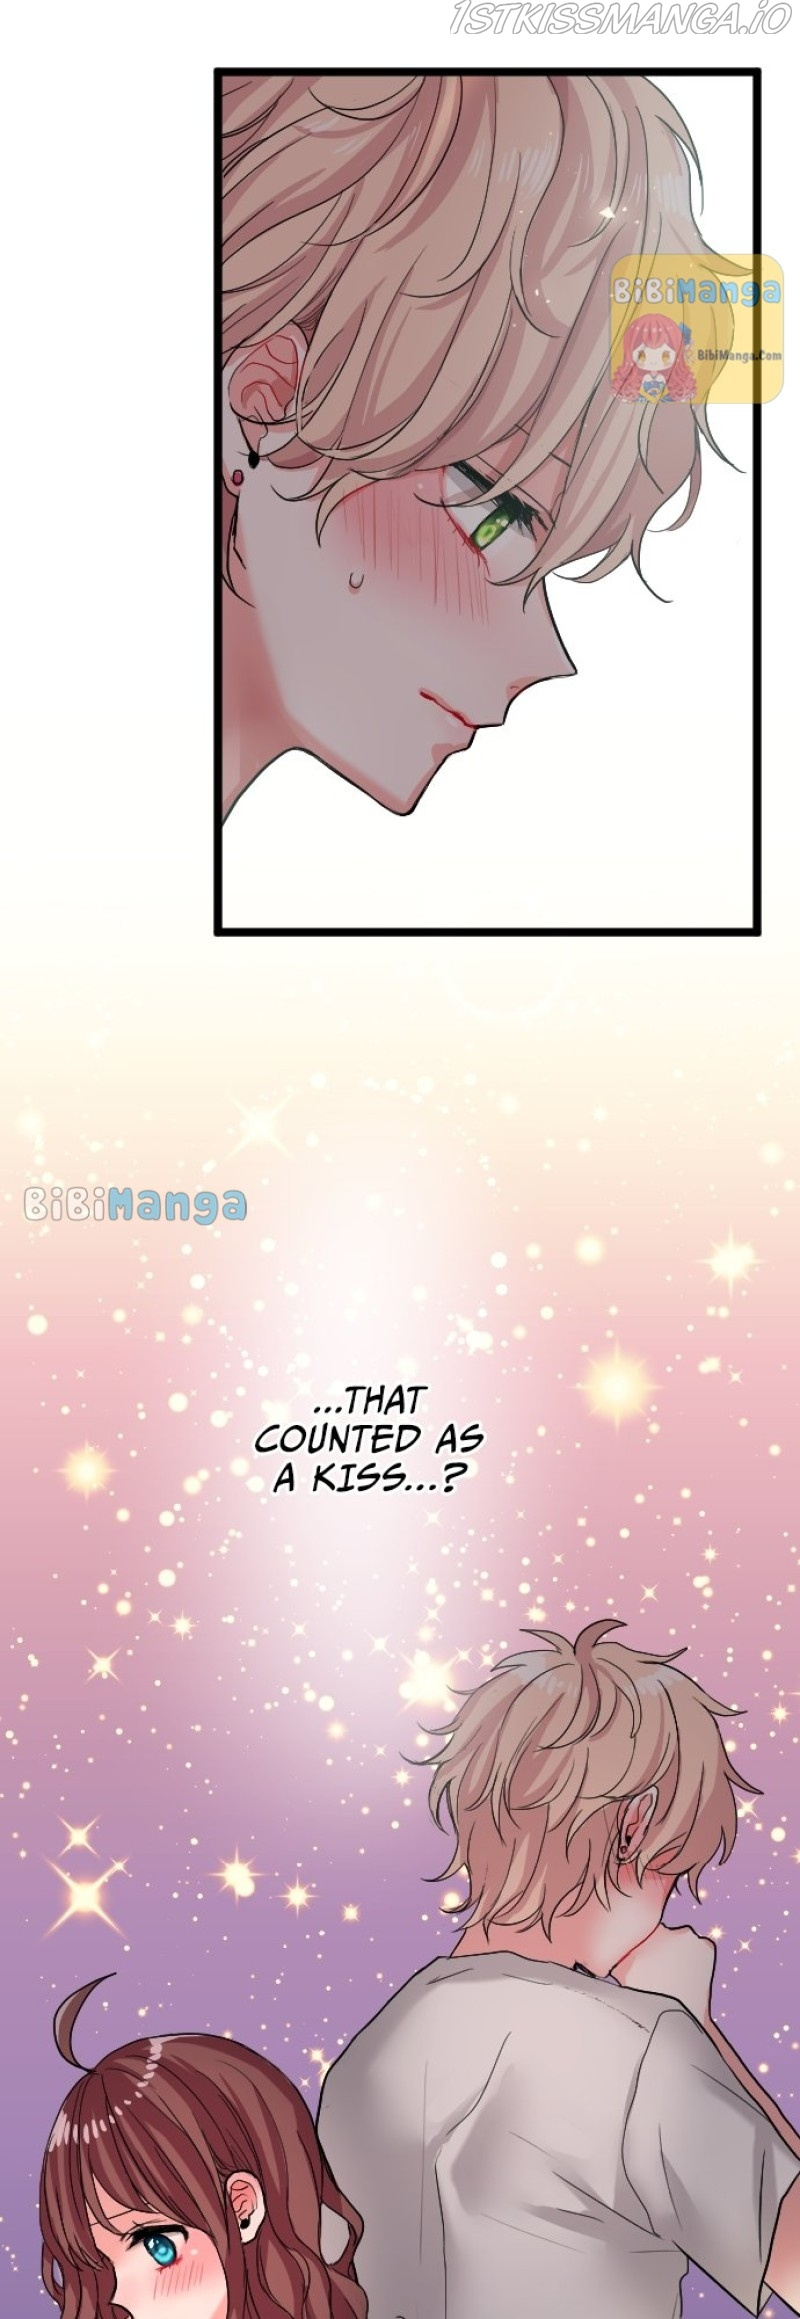 Usami’S Little Secret! - Page 2